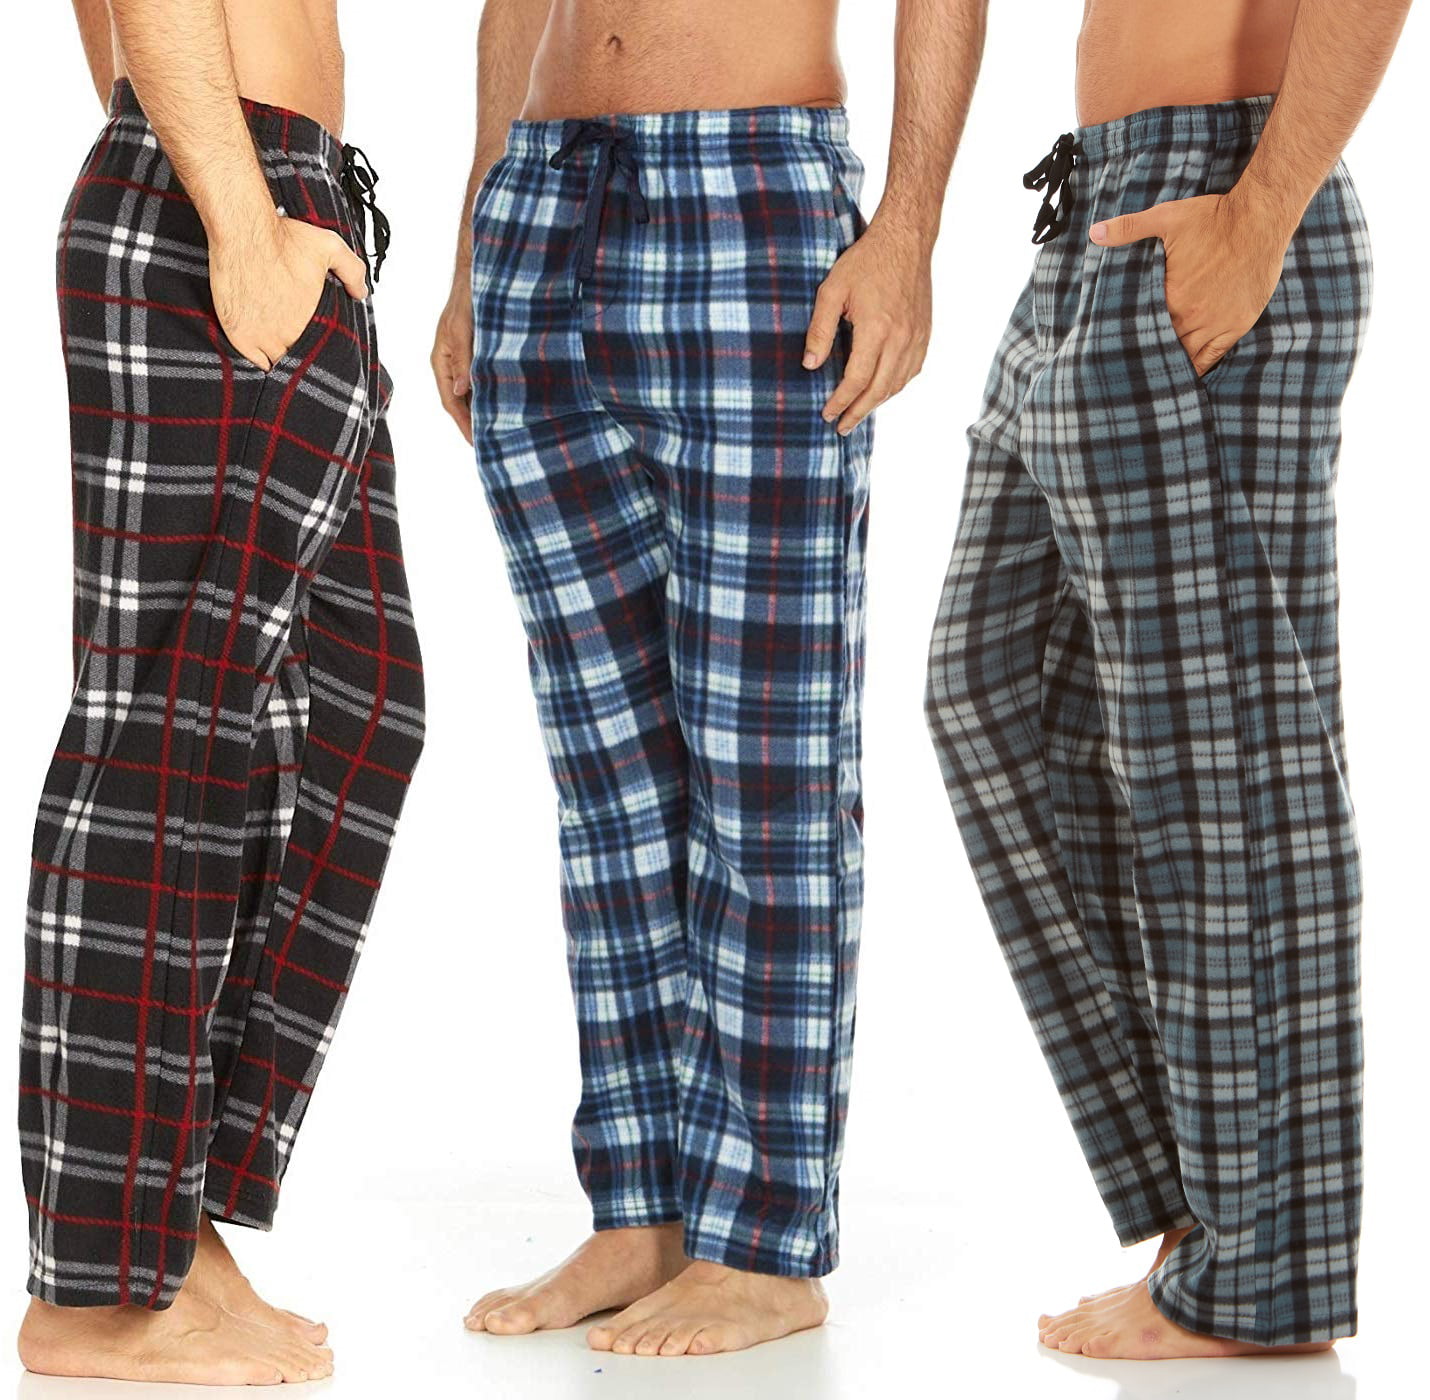 DARESAY Multipack of Mens Microfleece Pajama Pants/Lounge Wear with ...